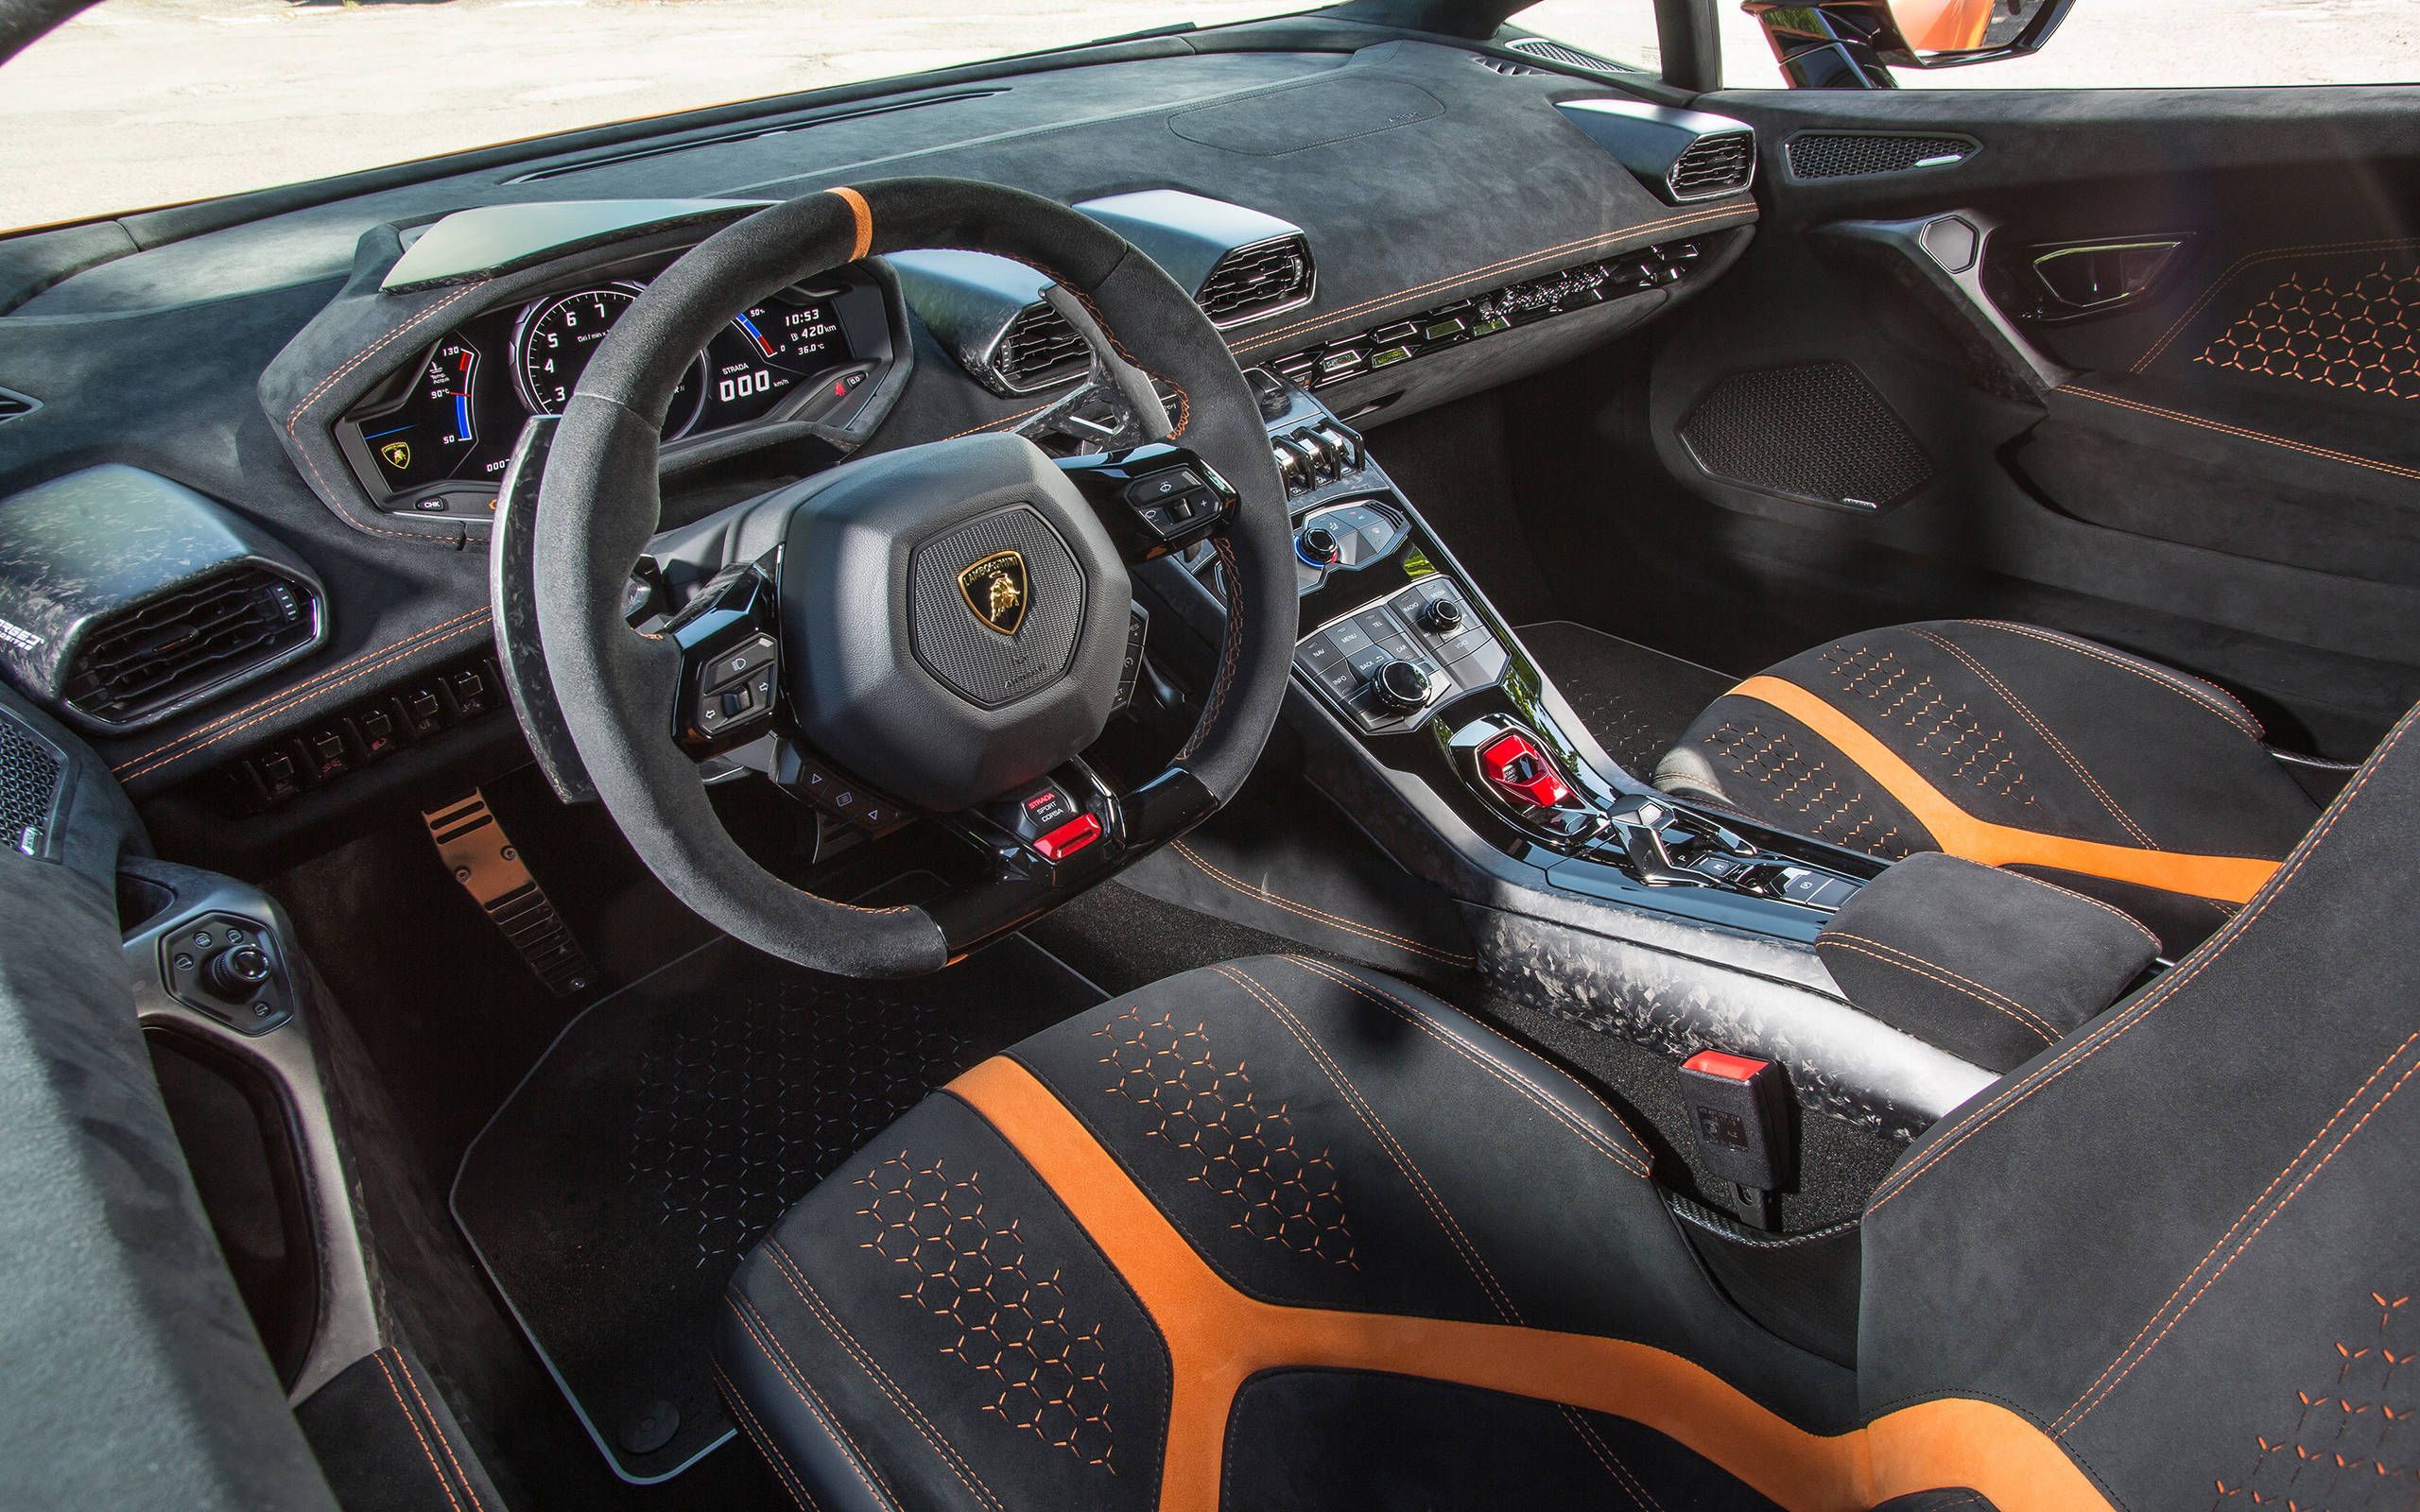 Gallery: Lamborghini Huracan Performante interior